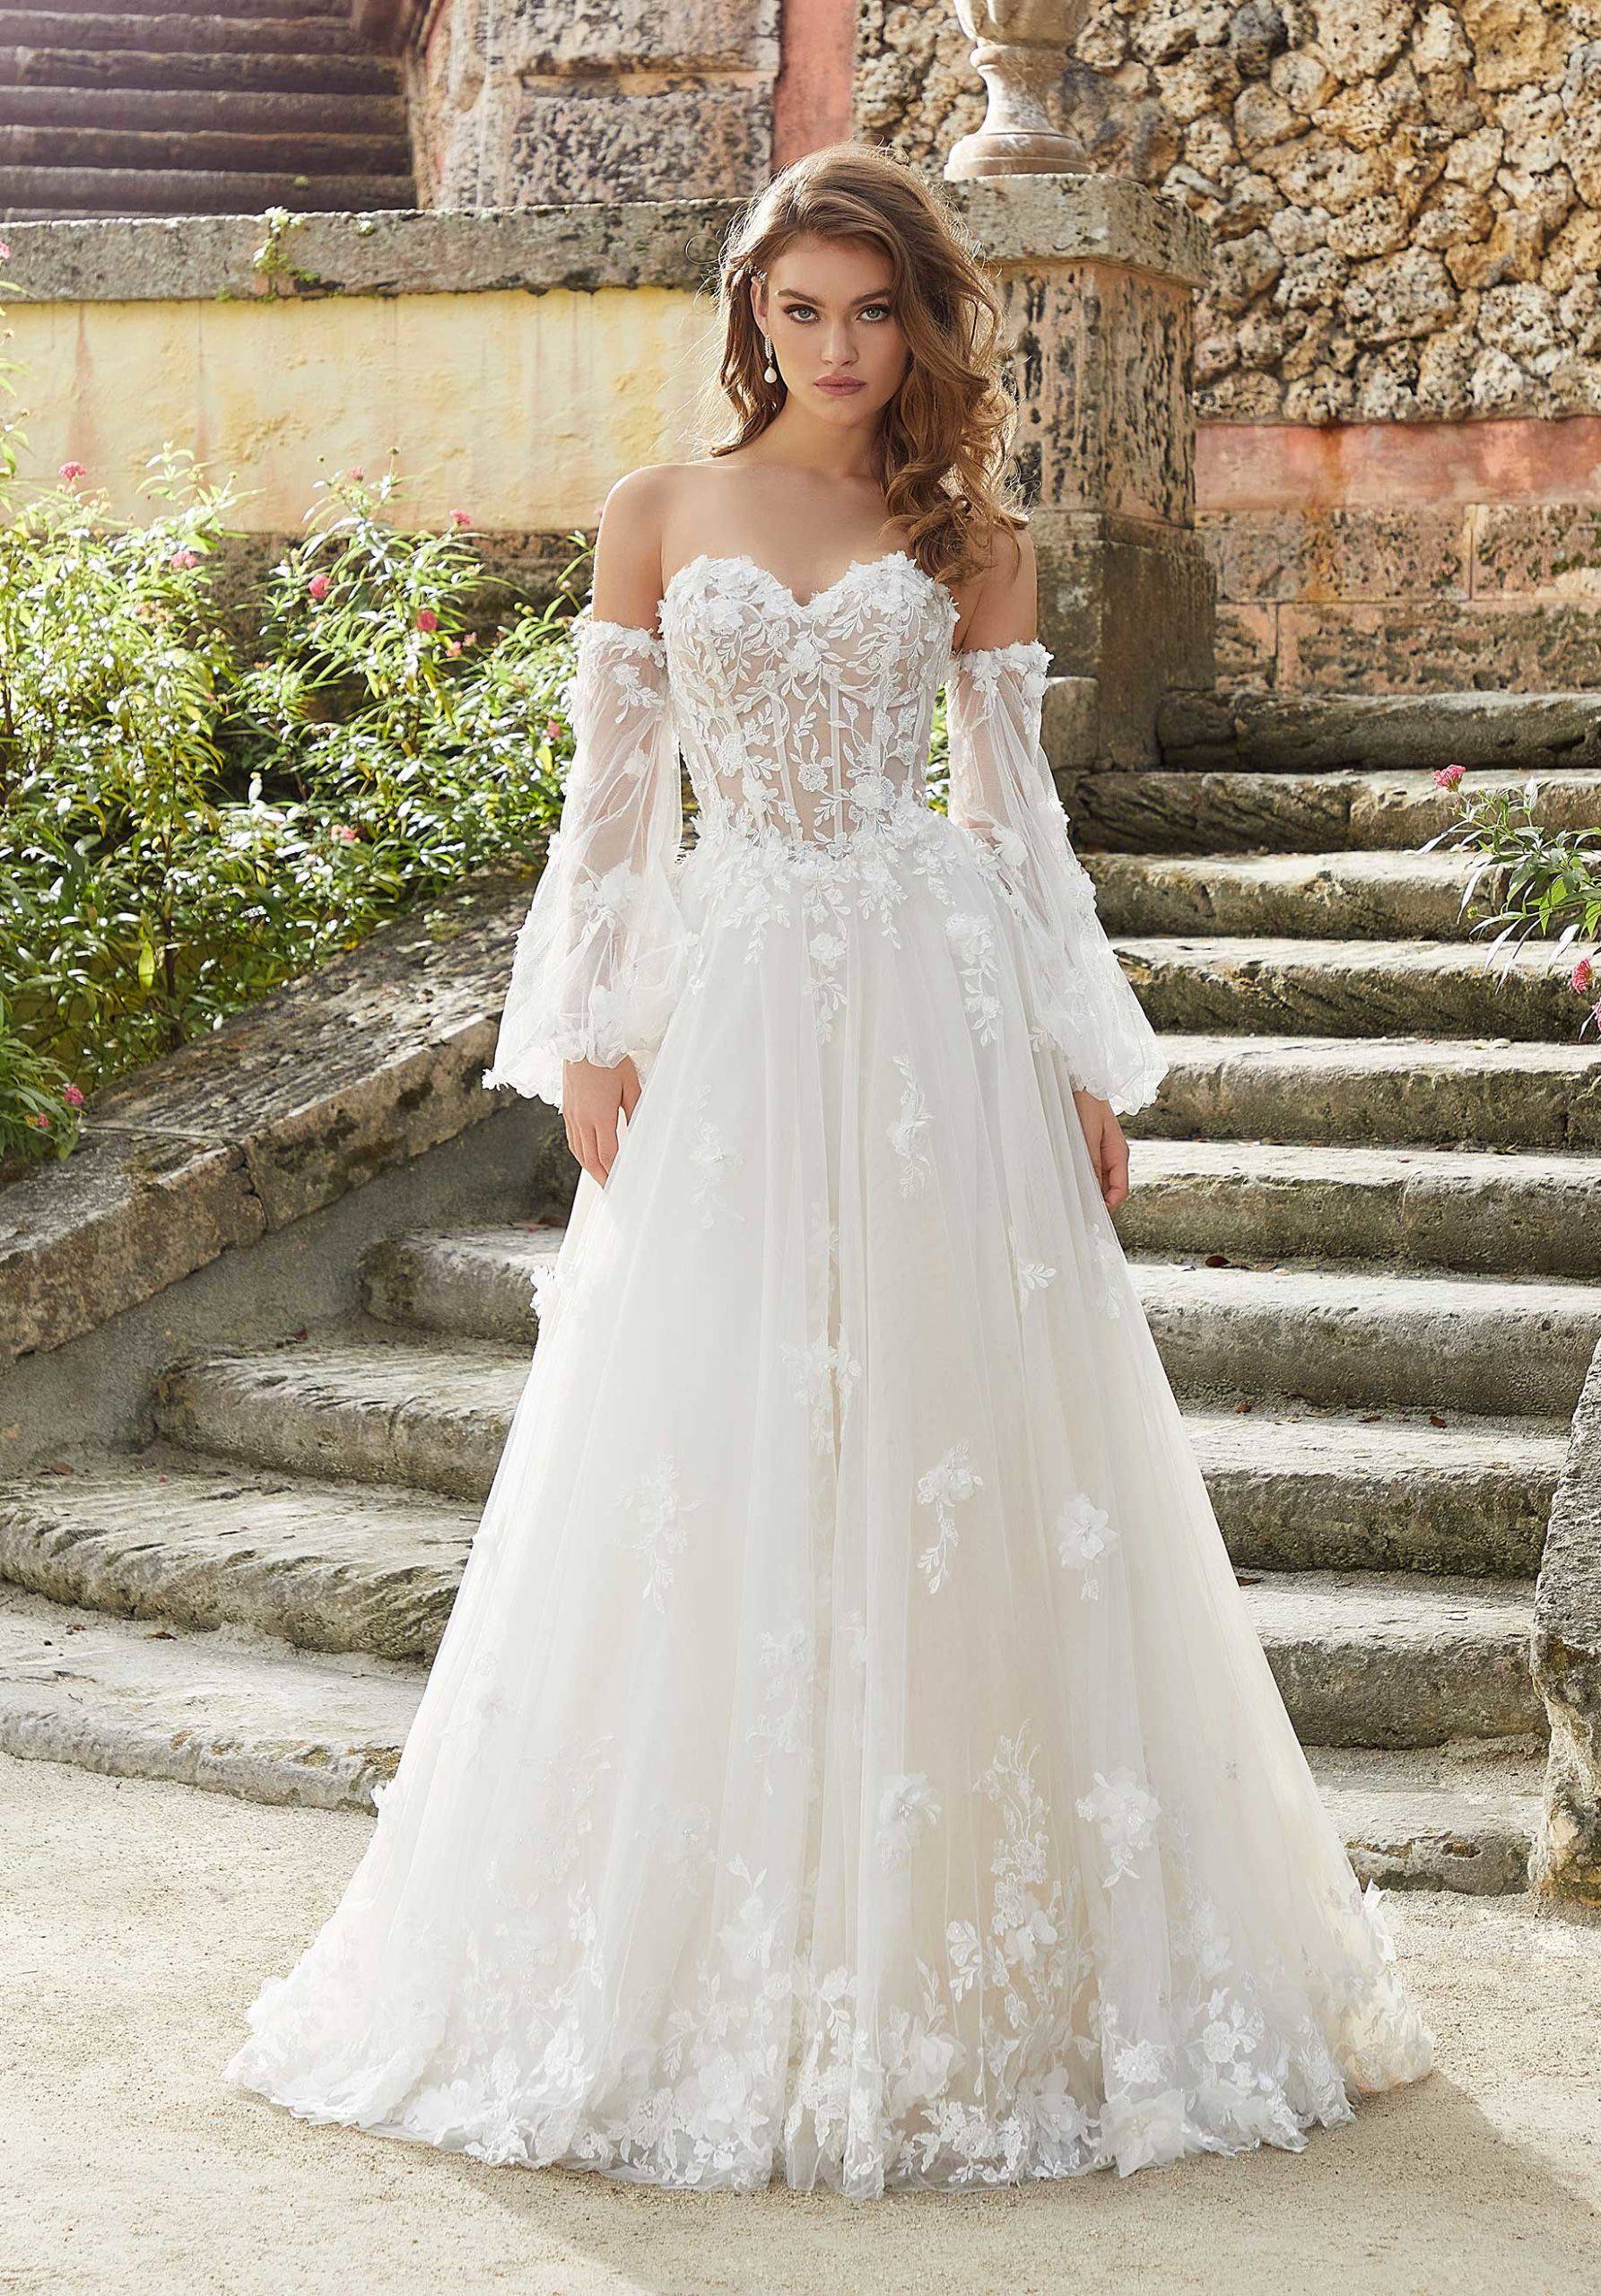 Model in white bridal dress